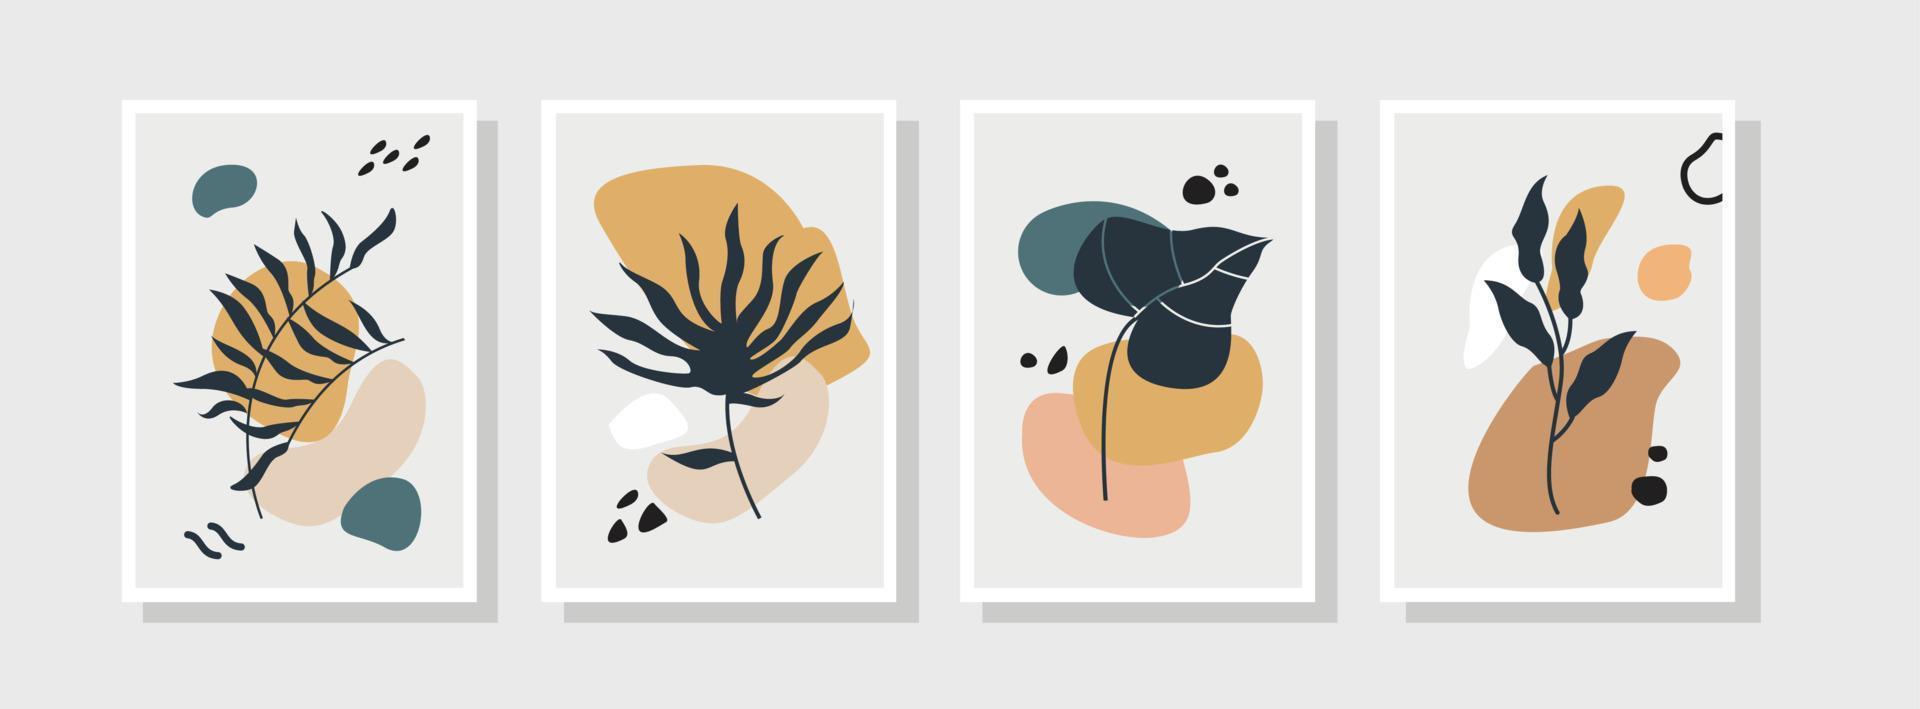 abstraktes Pflanzenkunstdesign für Druck, Cover, Tapete, minimale Wandkunst und Natur. Vektor-Illustration. vektor